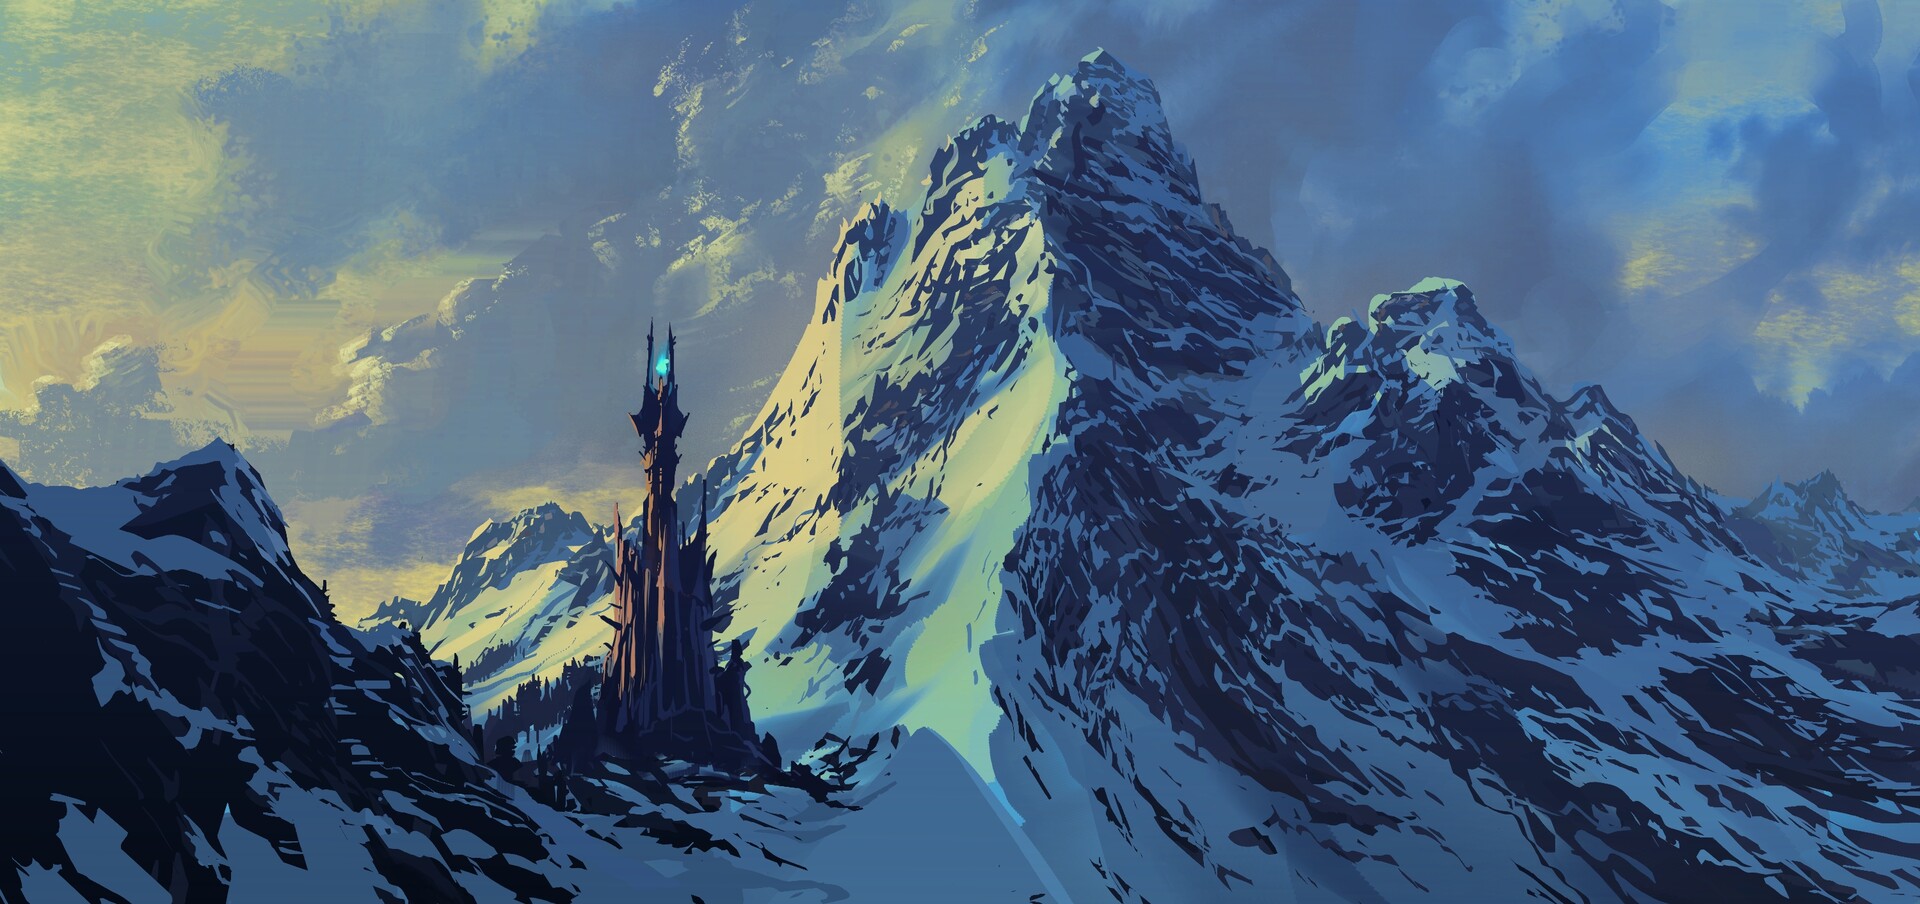 General 1920x904 Philipp A Urlich digital art fantasy art snow tower mountains